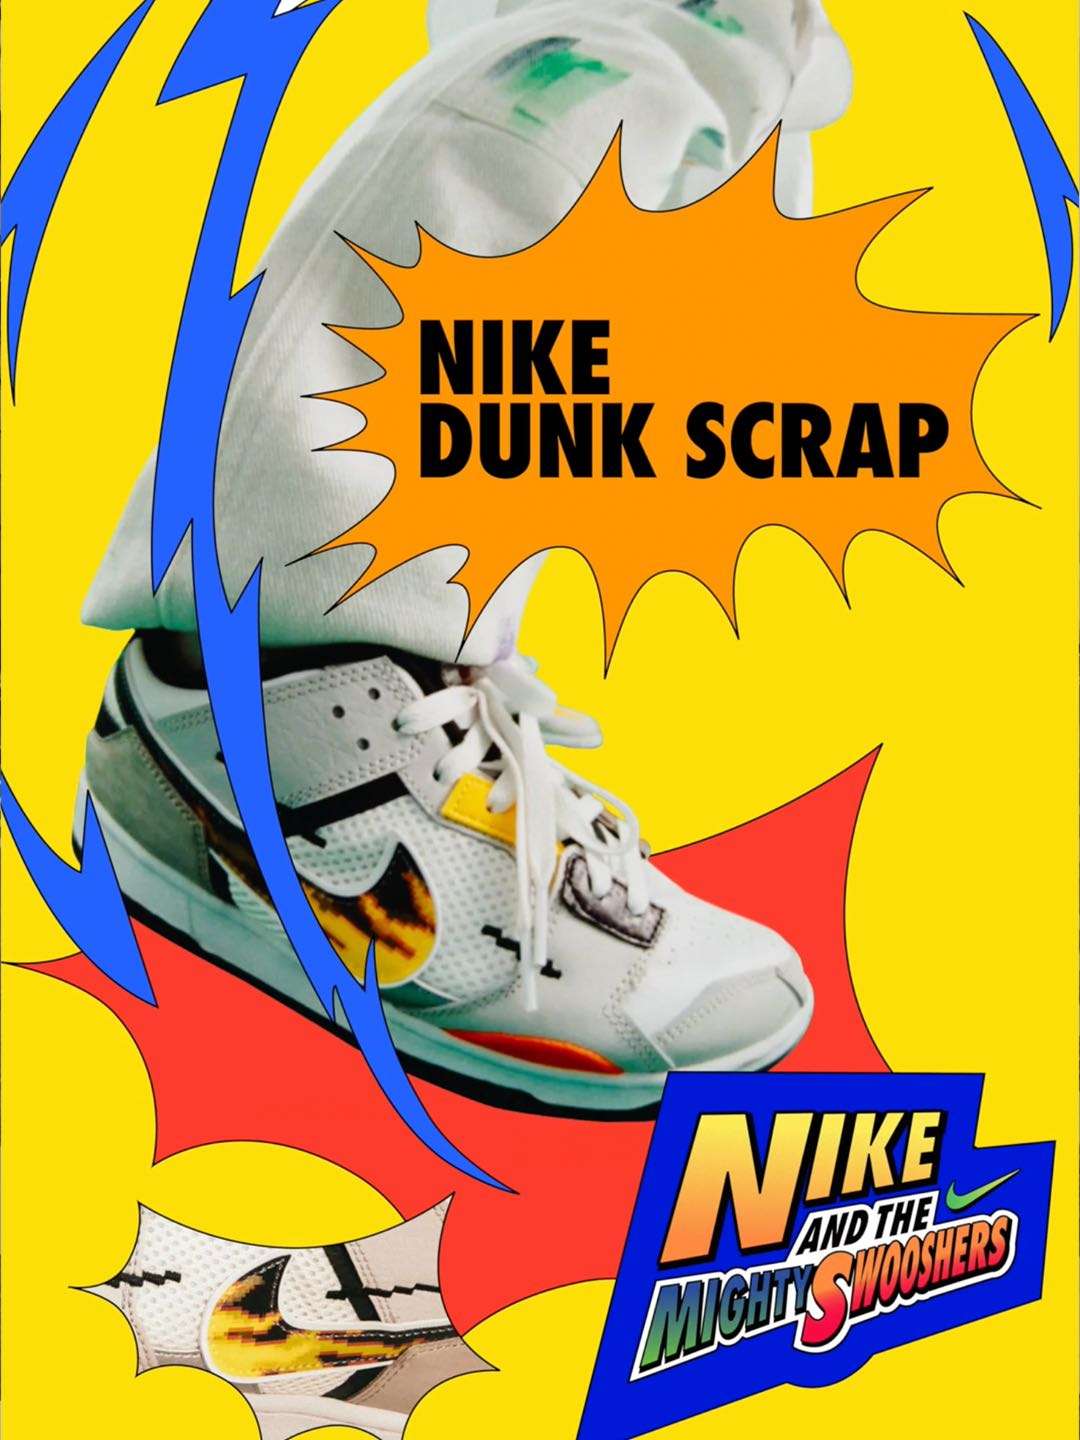 Swooshers_DunkScrap_Nike